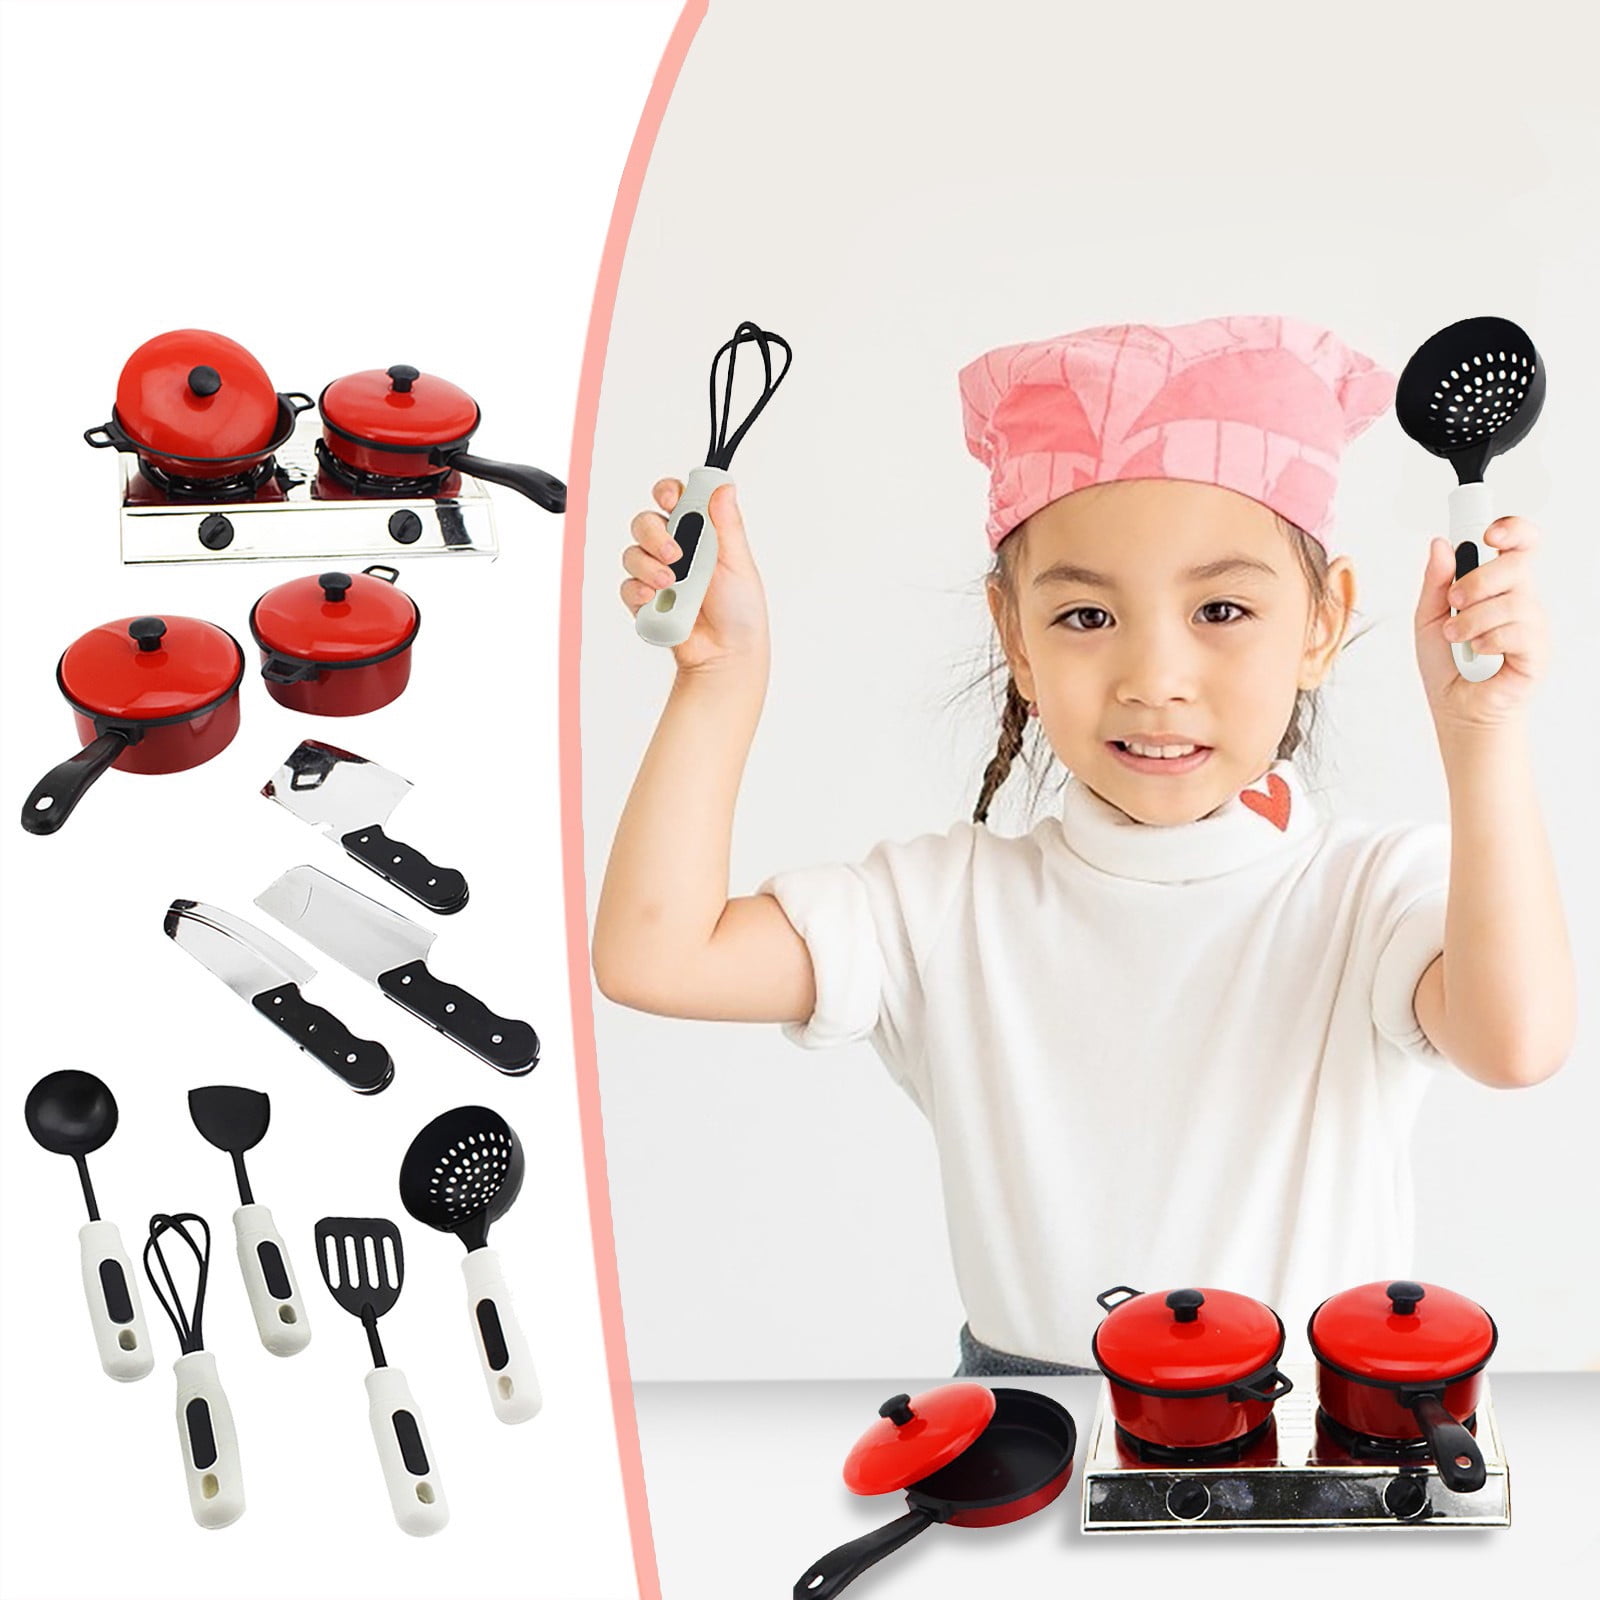 13Pcs Kitchen Cooking Utensils Pots Pans Accessories Kids Play Children Toy Gift 